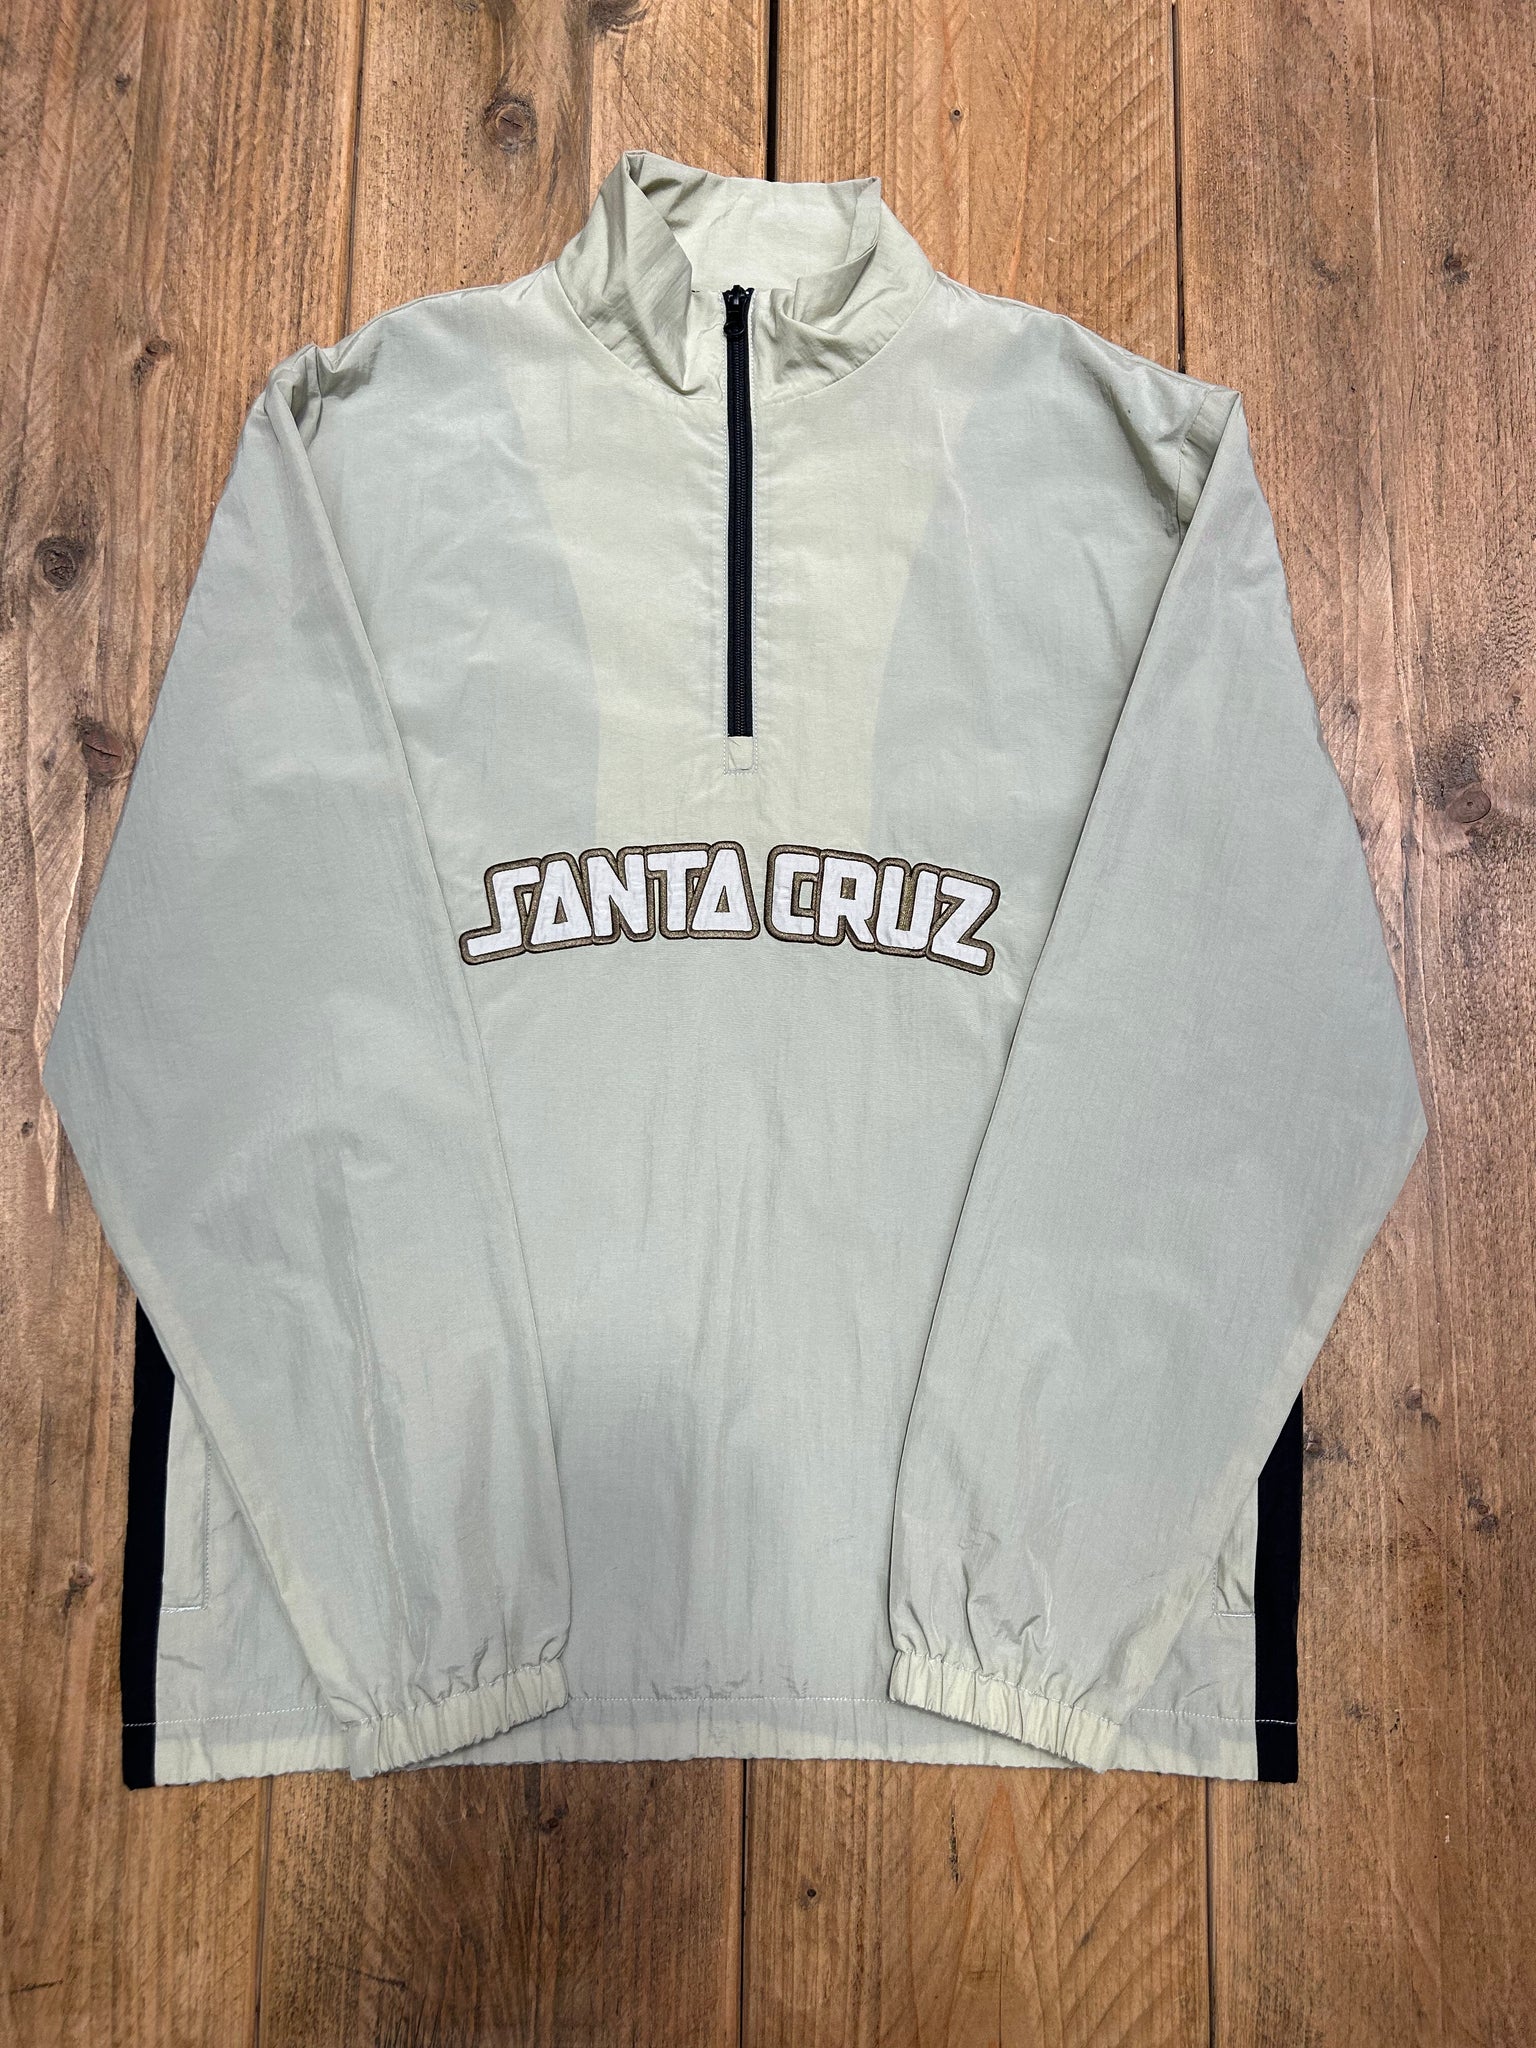 Santa Cruz Arch Strip Lightweight Jacket Cream Size M Sample 50% Off Sale